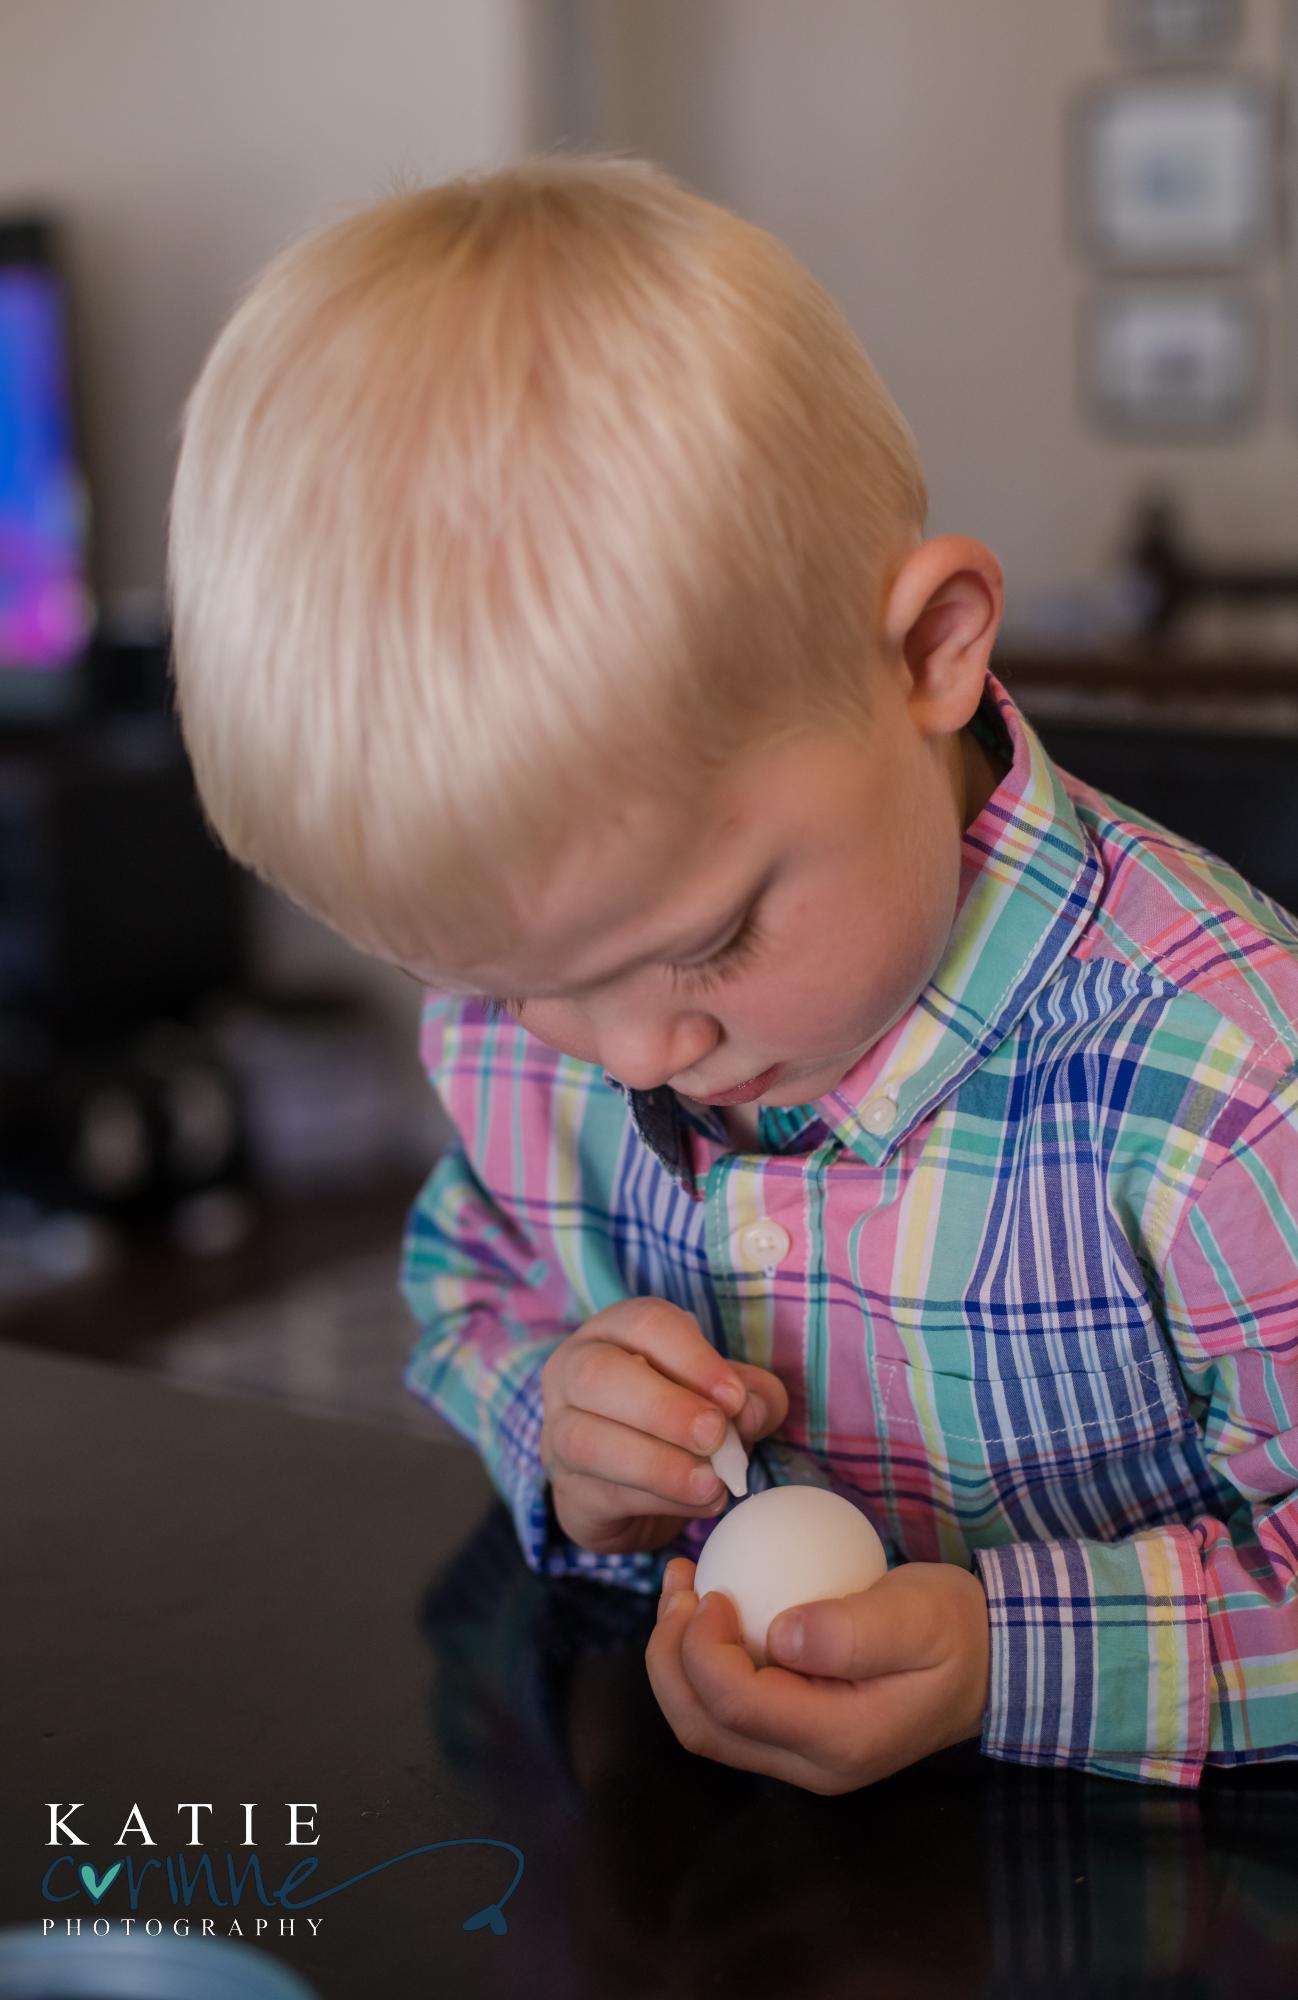 Colorado boy writes on egg with white crayon